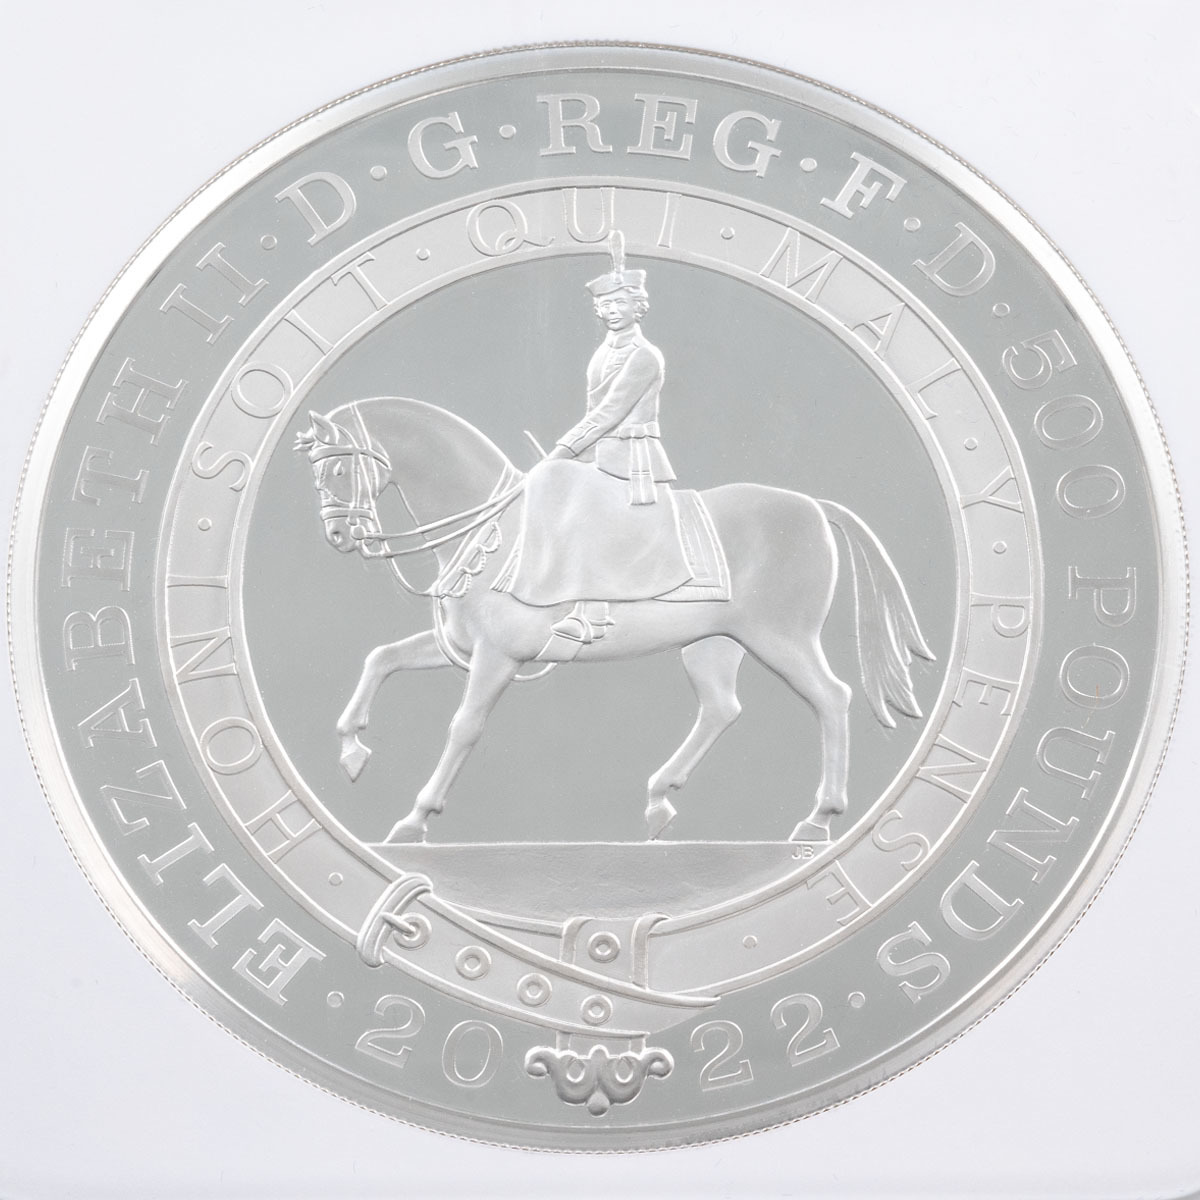 UK22PJKS 2022 Queen Elizabeth II Platinum Jubilee One Kilogram Silver Proof Coin NGC Graded PF 70 Ultra Cameo First 20 Struck Obverse